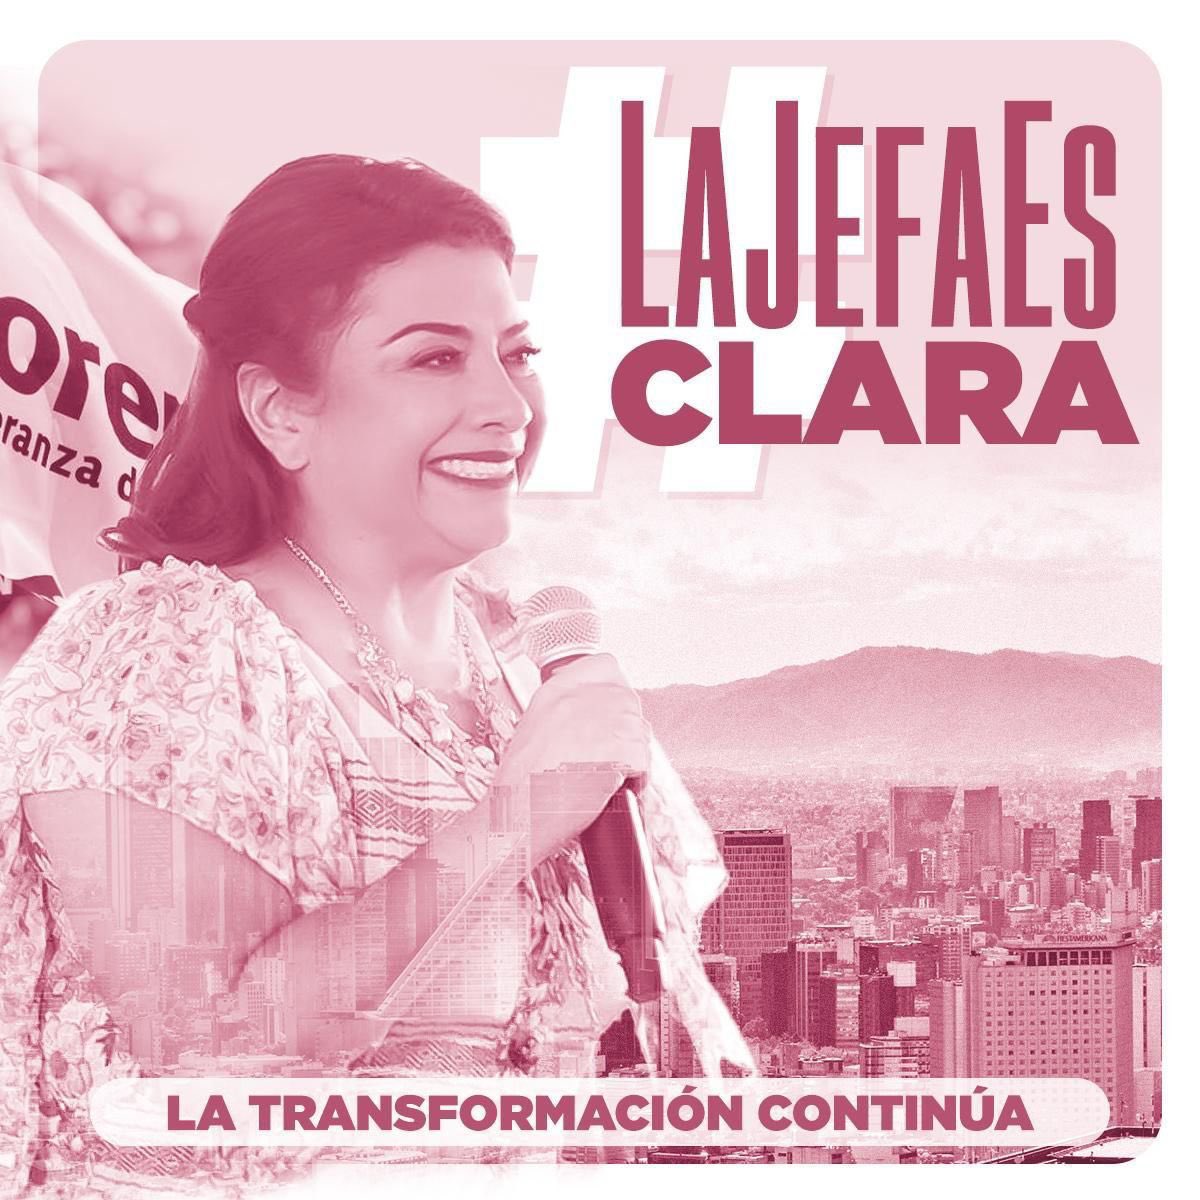 #DebateChilango #LaJefaEsClara #LaTransformaciónEsClara